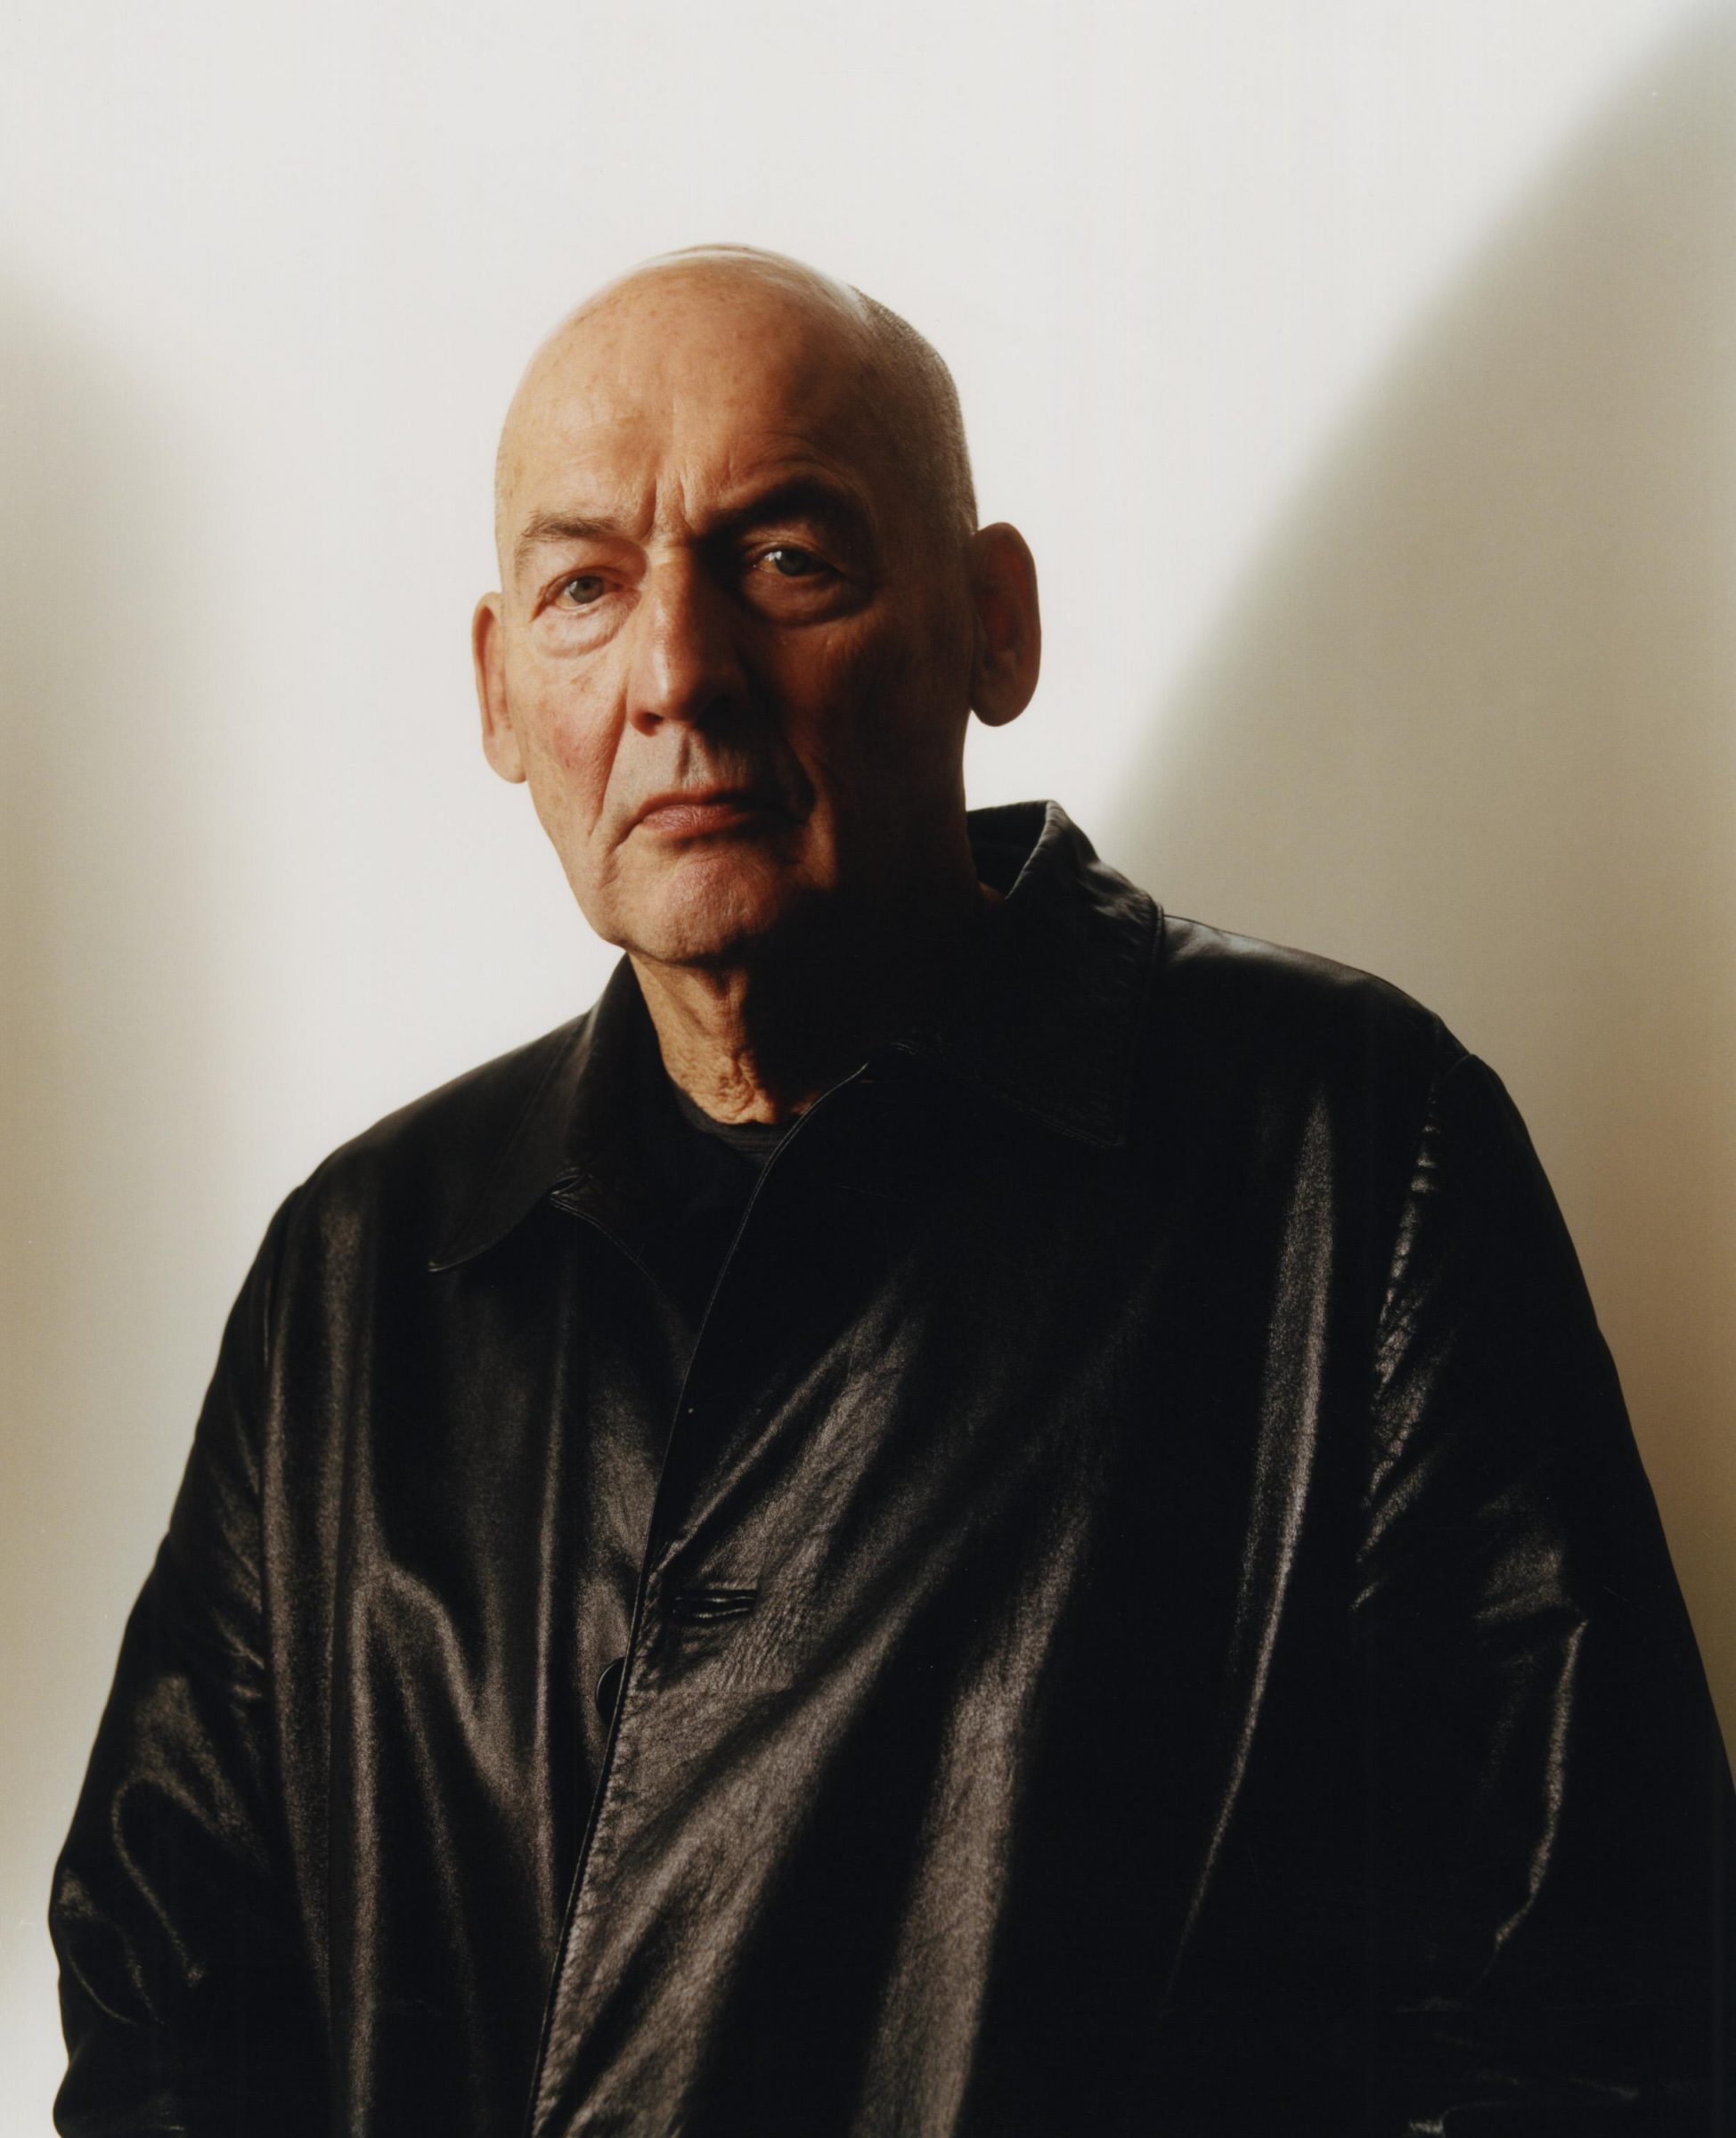 Rem Koolhaas, M le Monde, Paris, 2018 - © Maciek Pożoga